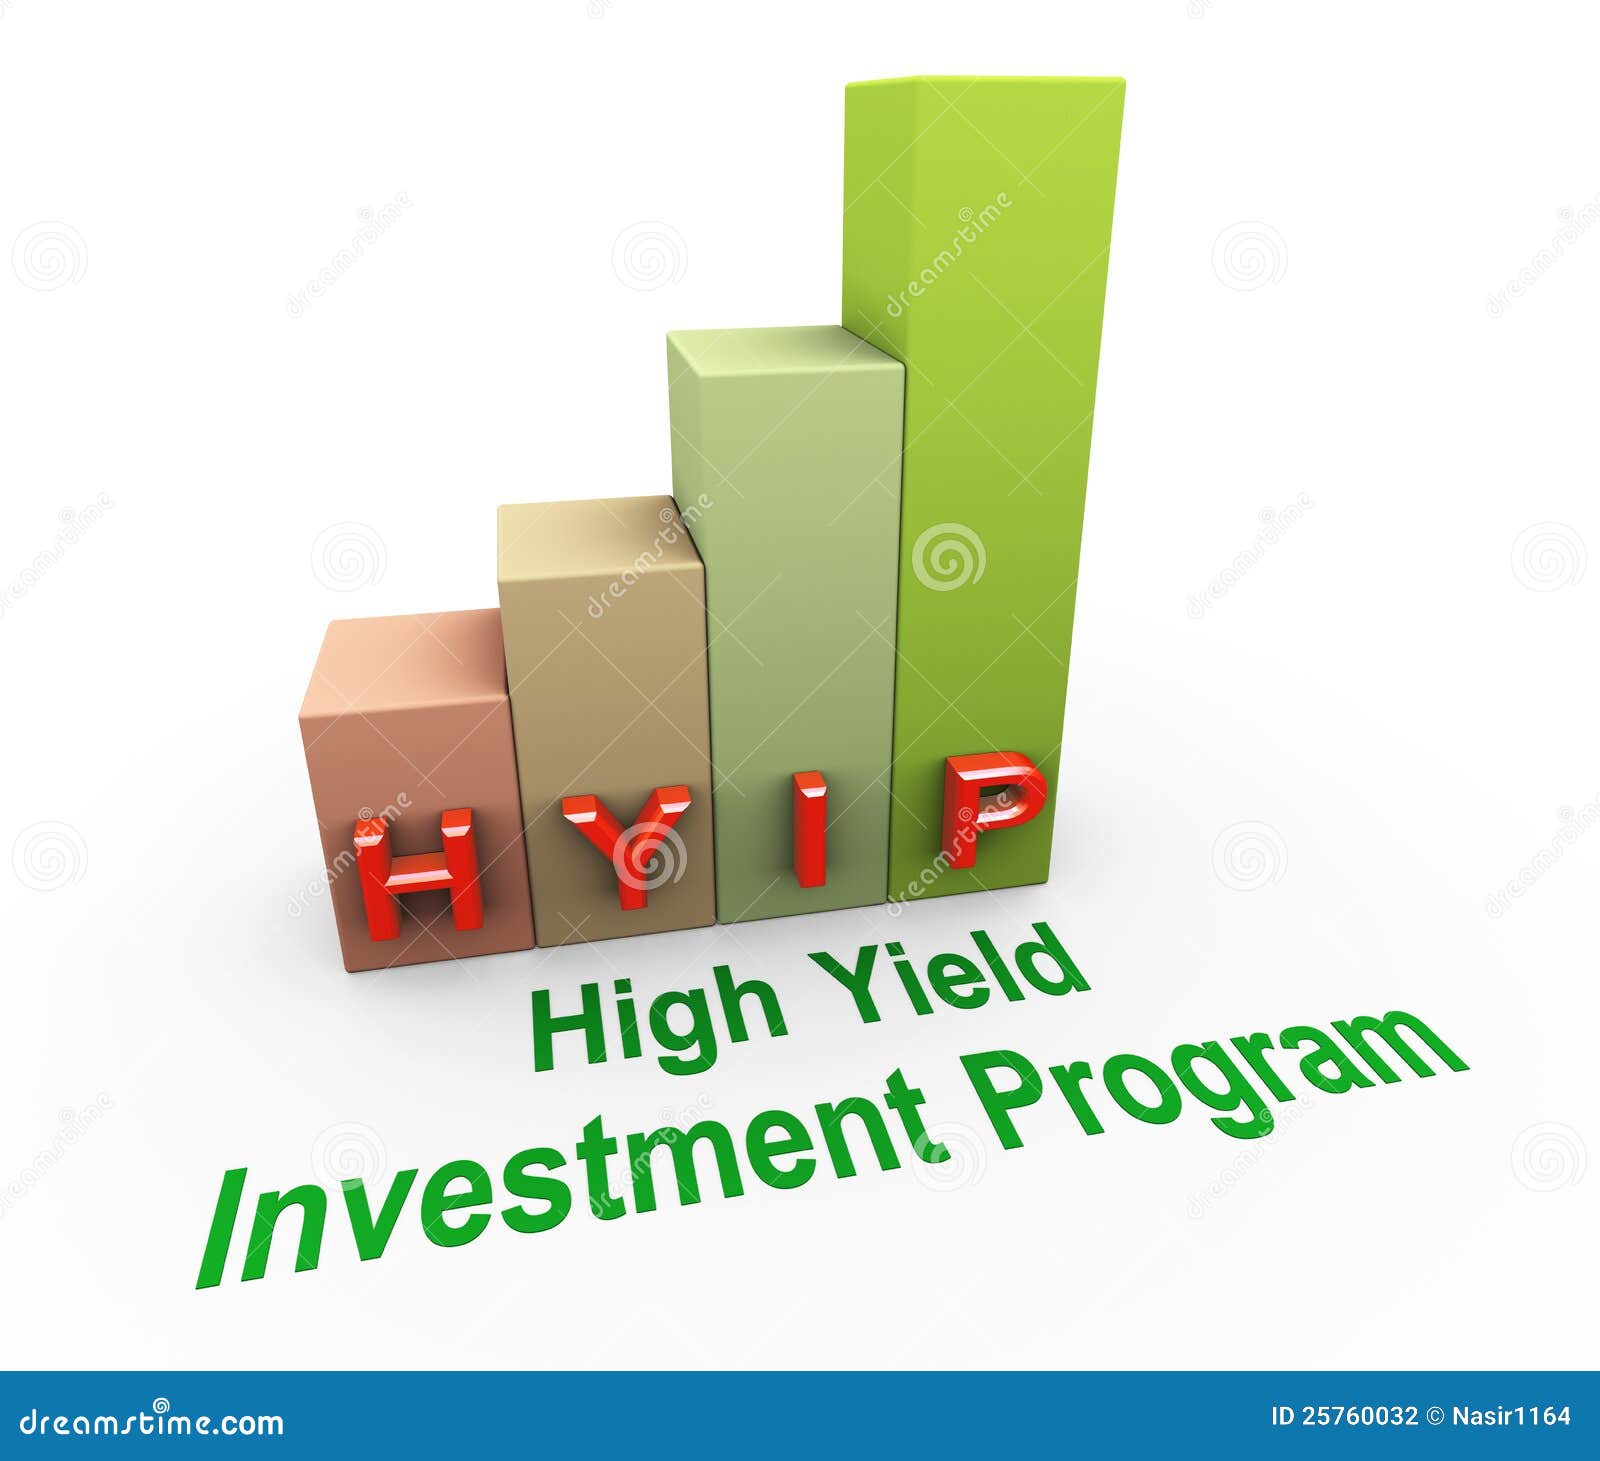 High-yield investment program - Wikipedia